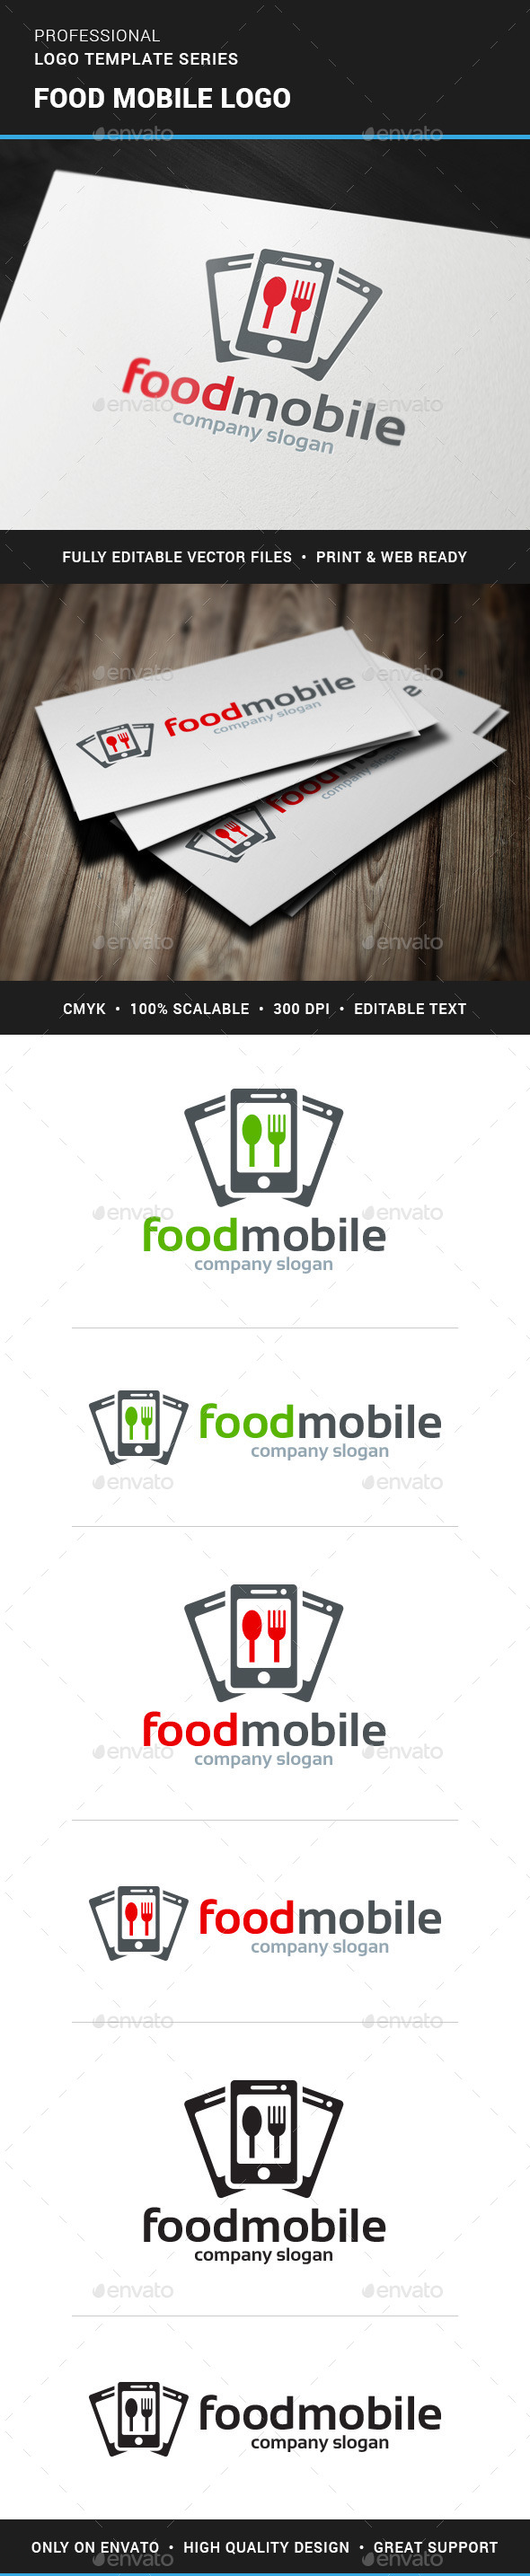 Food Mobile Logo Template